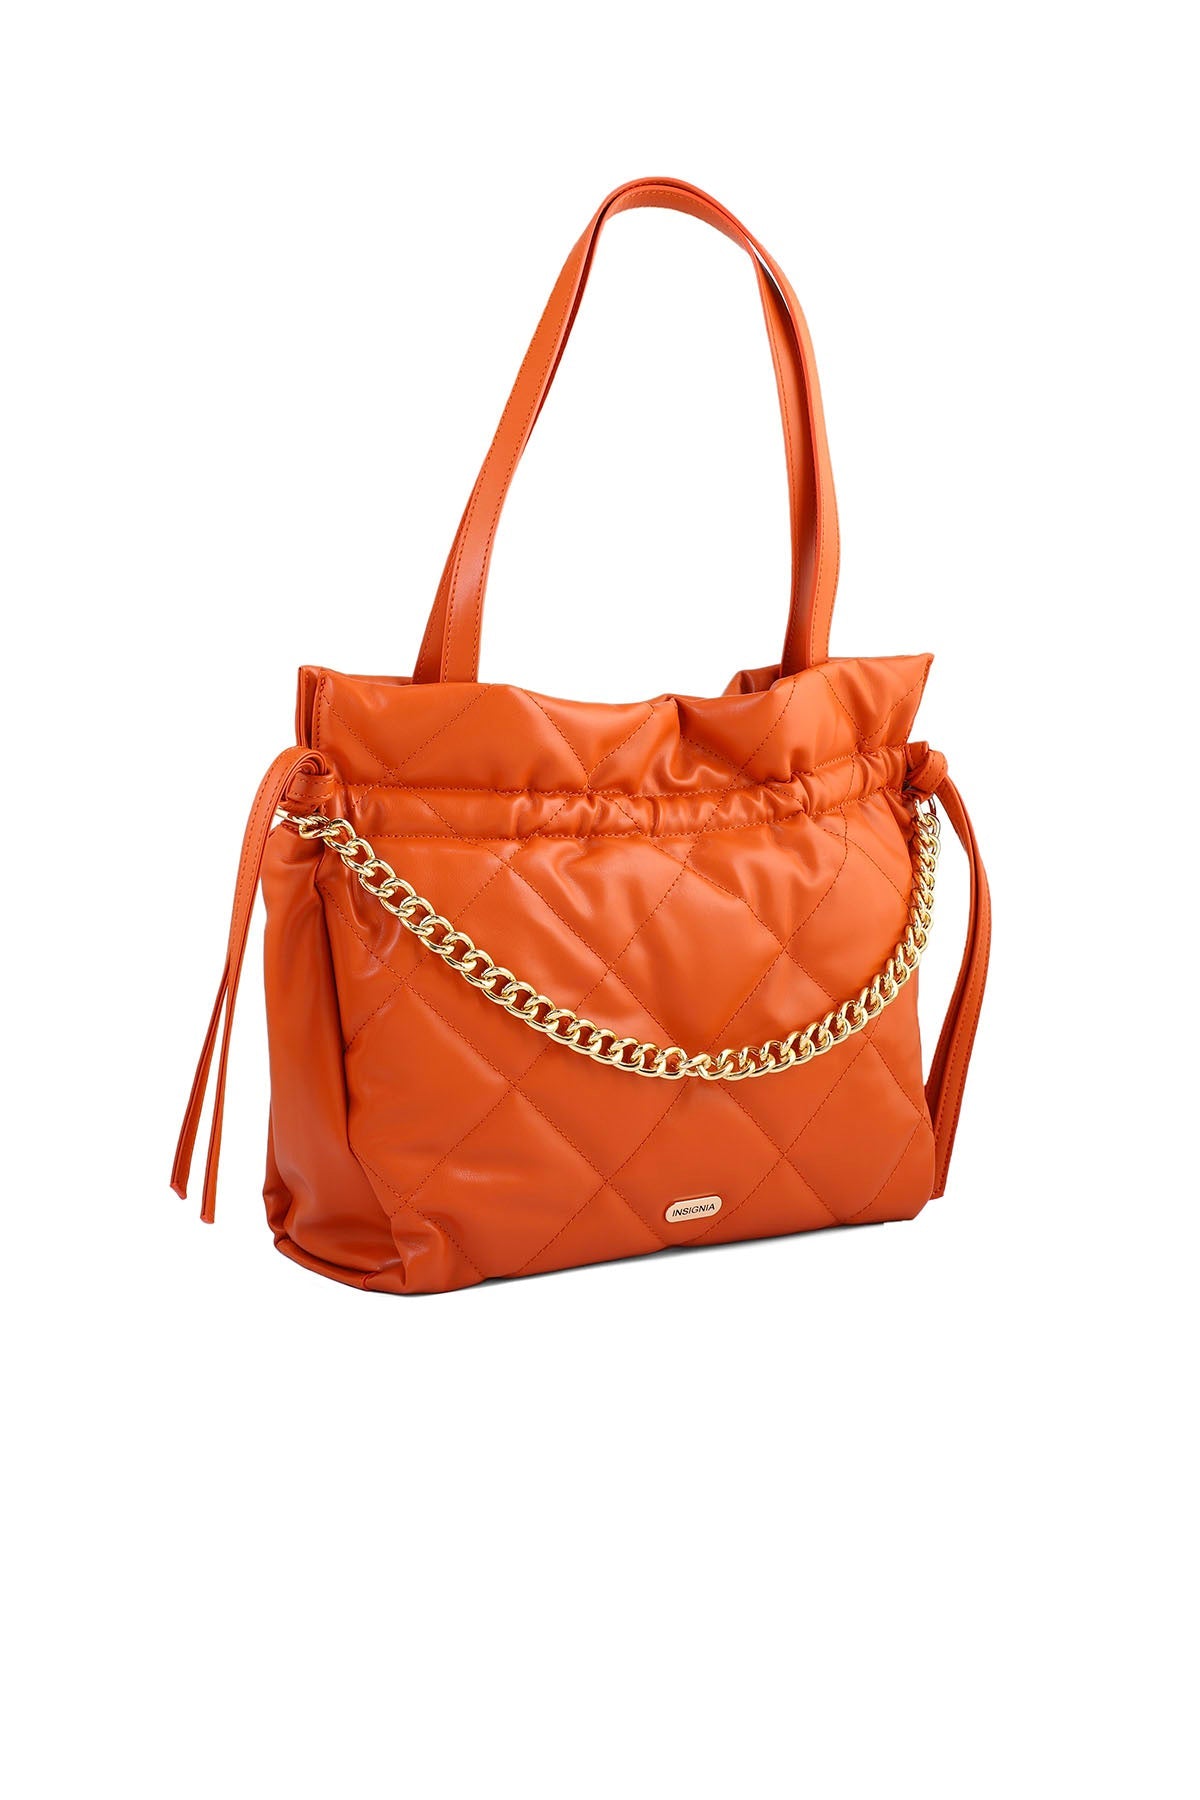 Bucket Hand Bags B15007-Orange